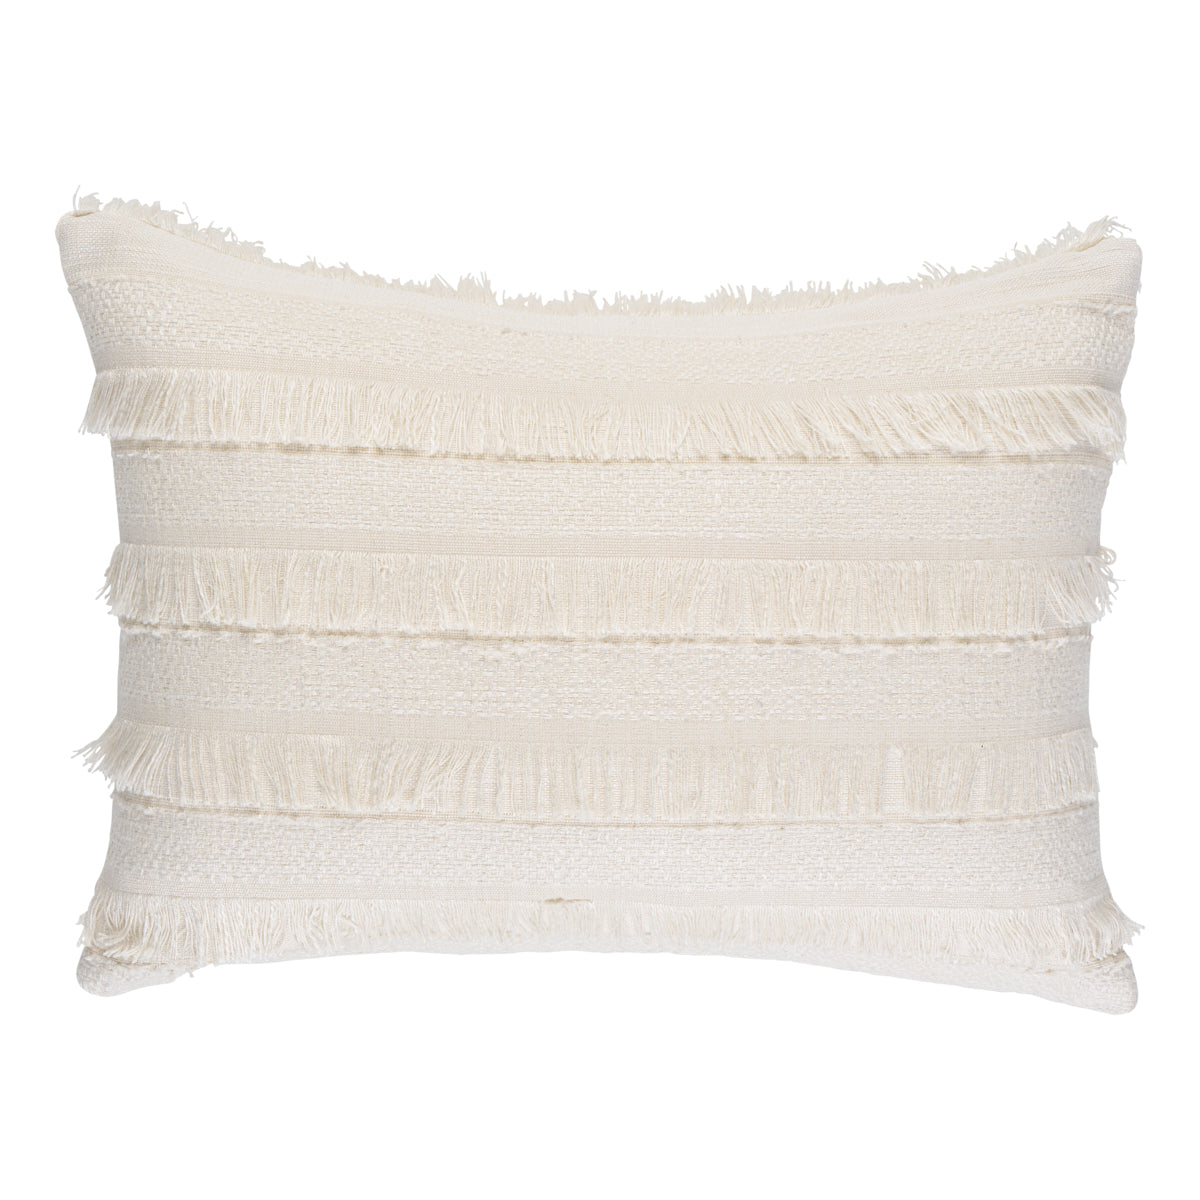 Purchase So7265115 | Acadia Pillow, Ivory - Schumacher Pillows